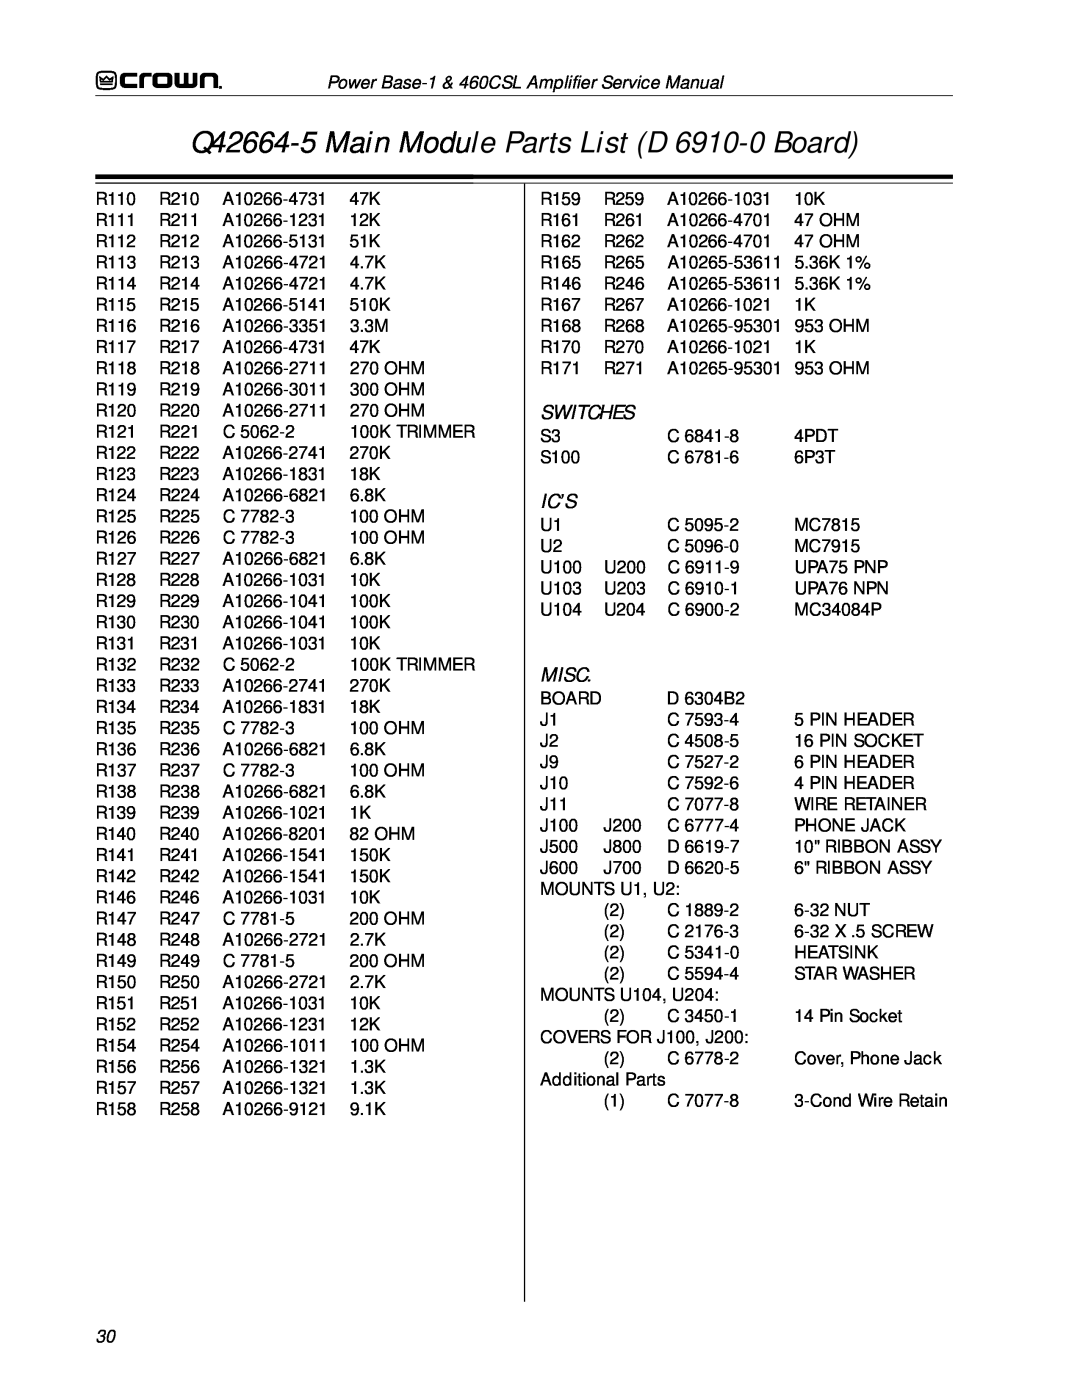 Crown 460CSL service manual Q42664-5Main Module Parts List D 6910-0Board, Switches, Ic’S, Misc, R110 